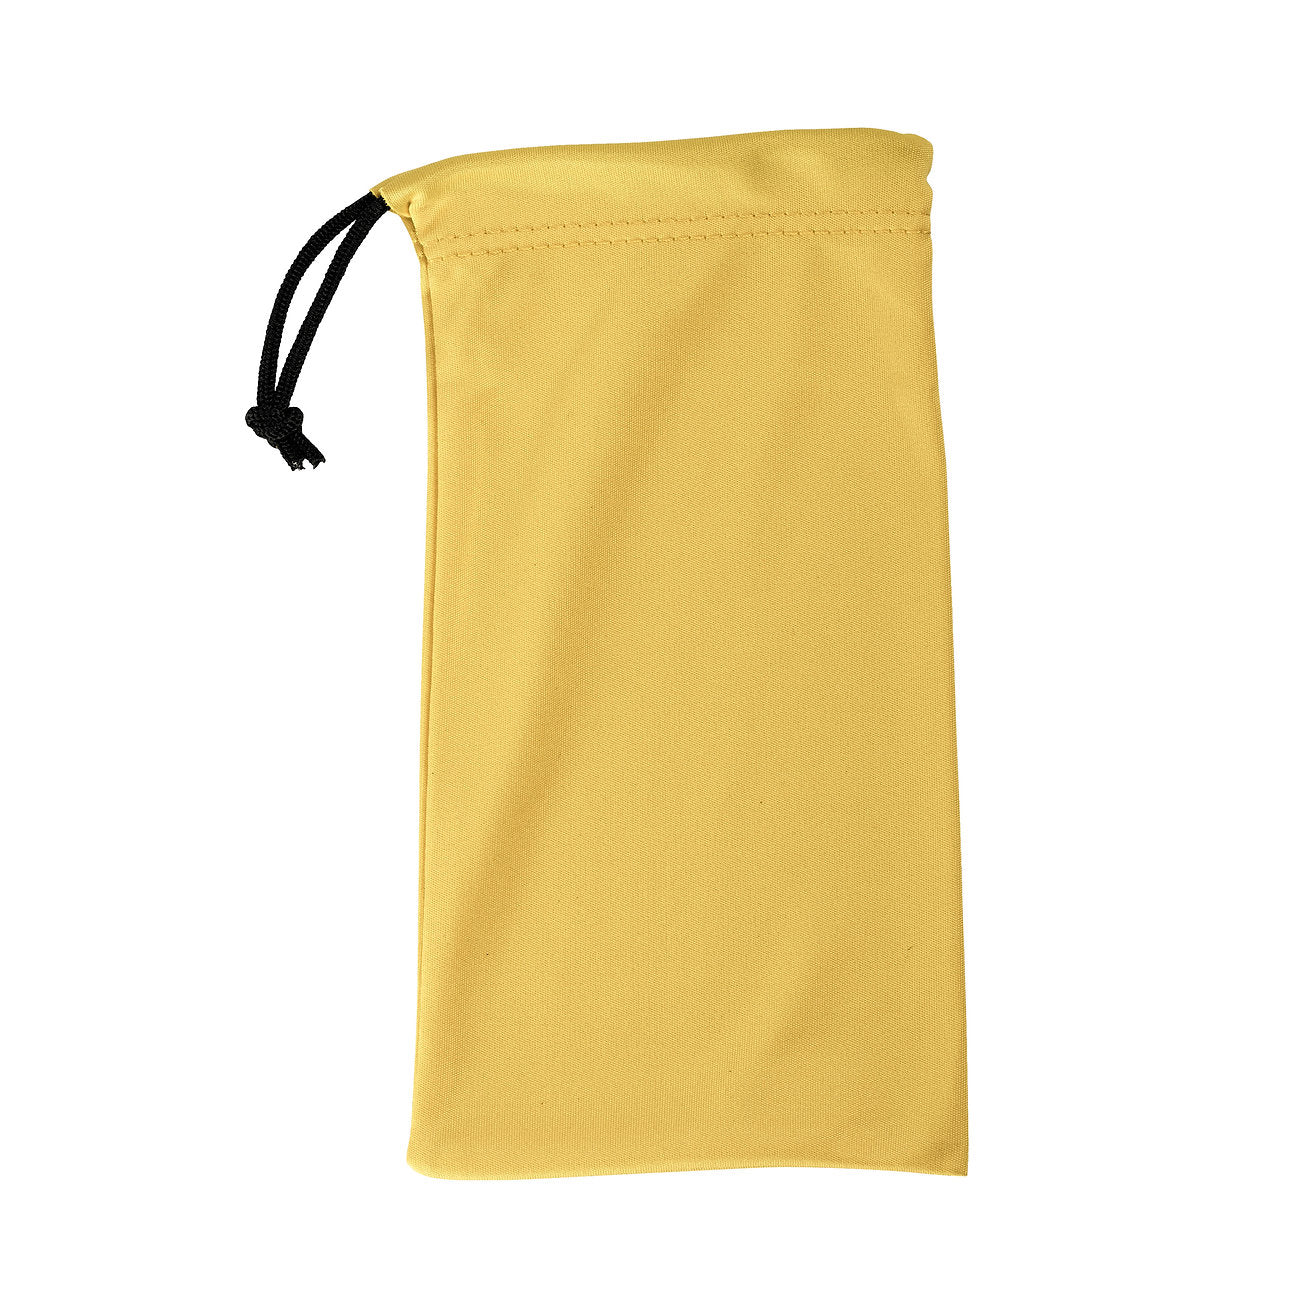 Yellow drawstring bag for glasses